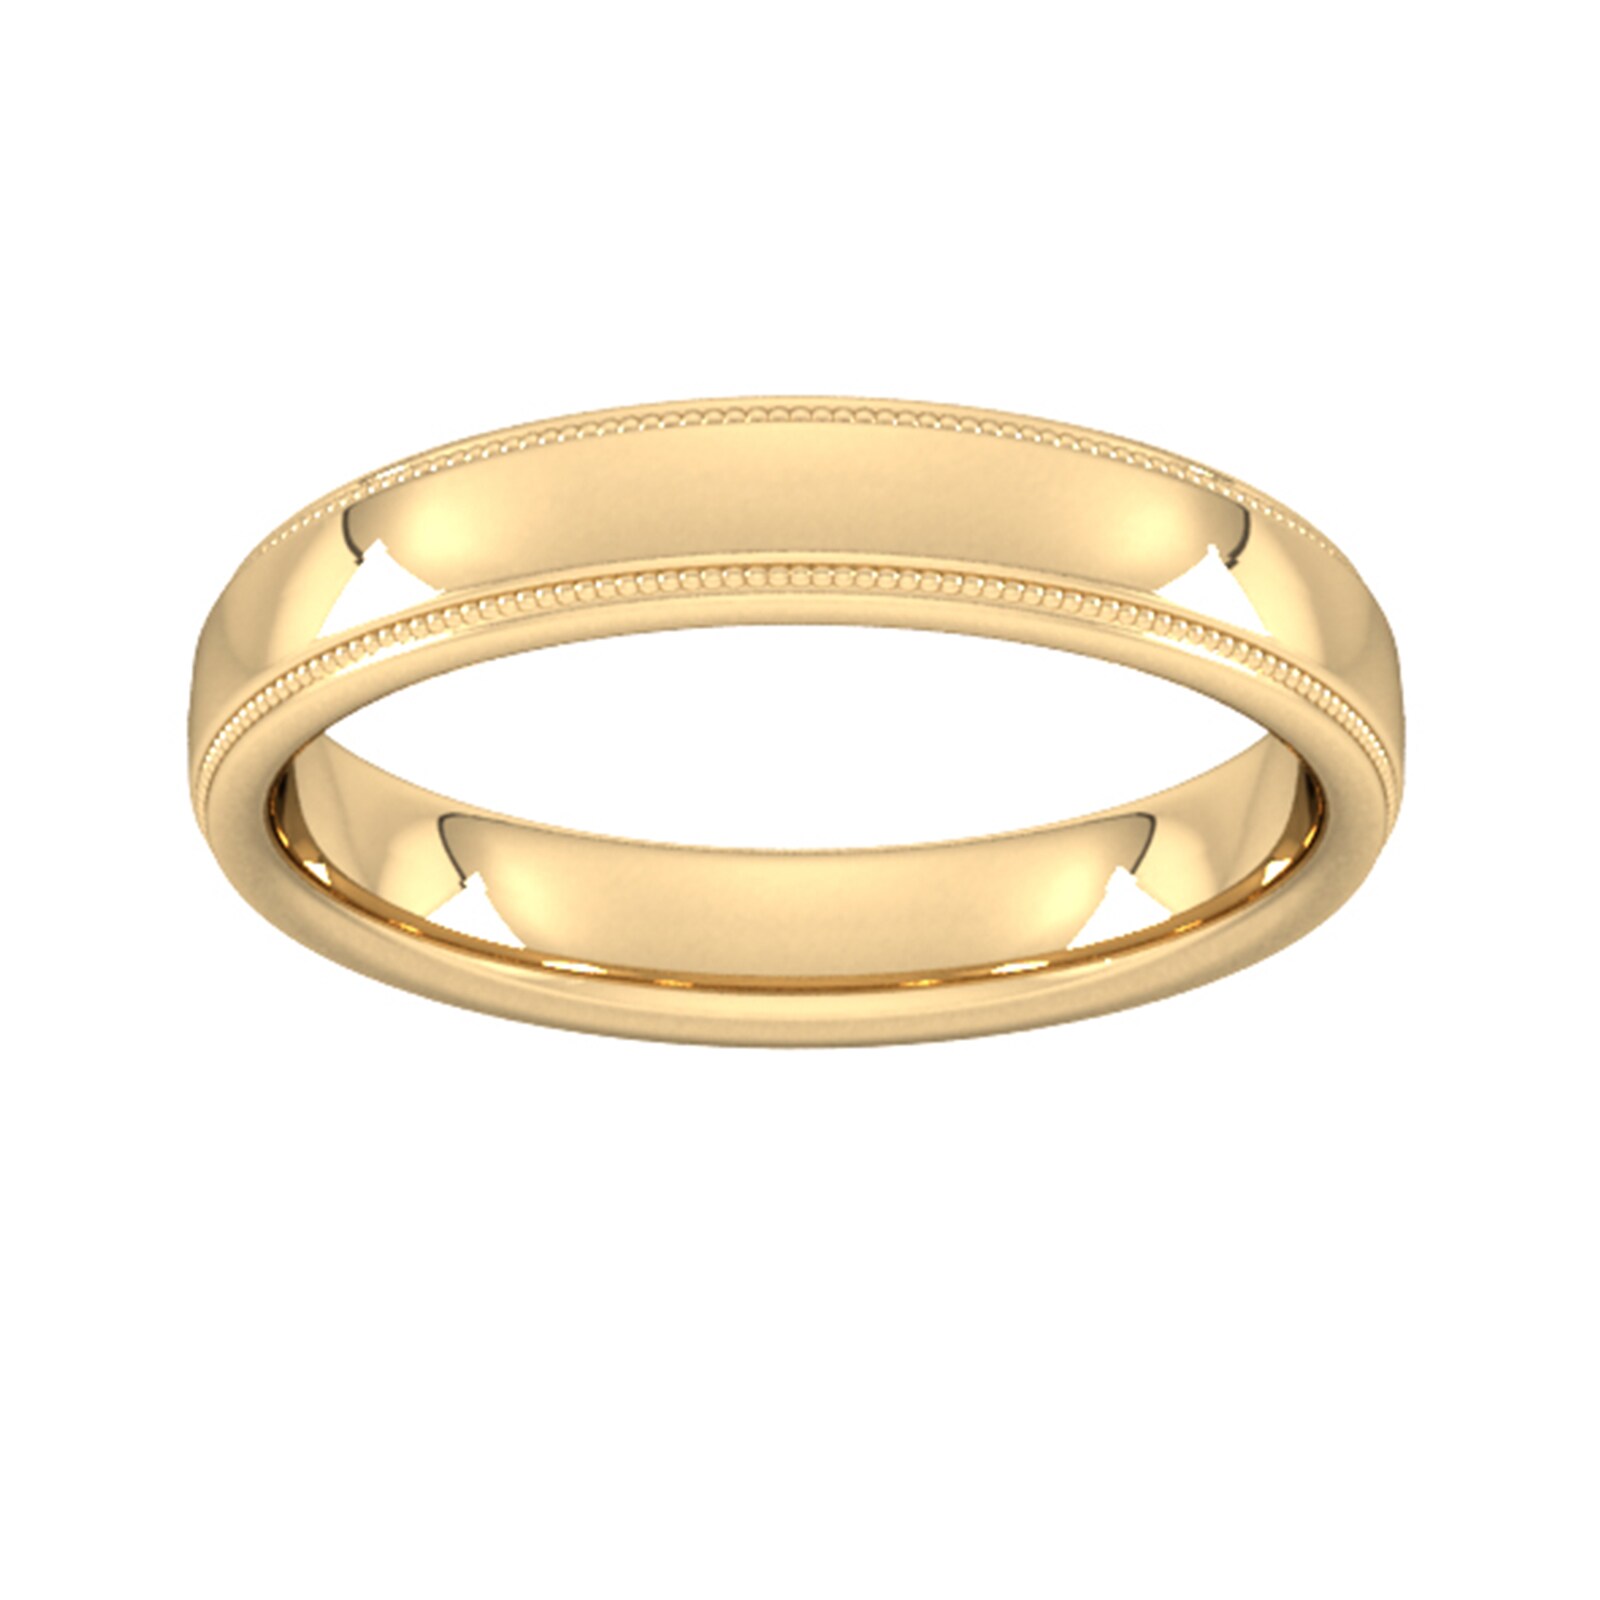 7mm D Shape Heavy Milgrain Edge Wedding Ring In 9 Carat Yellow Gold - Ring Size L